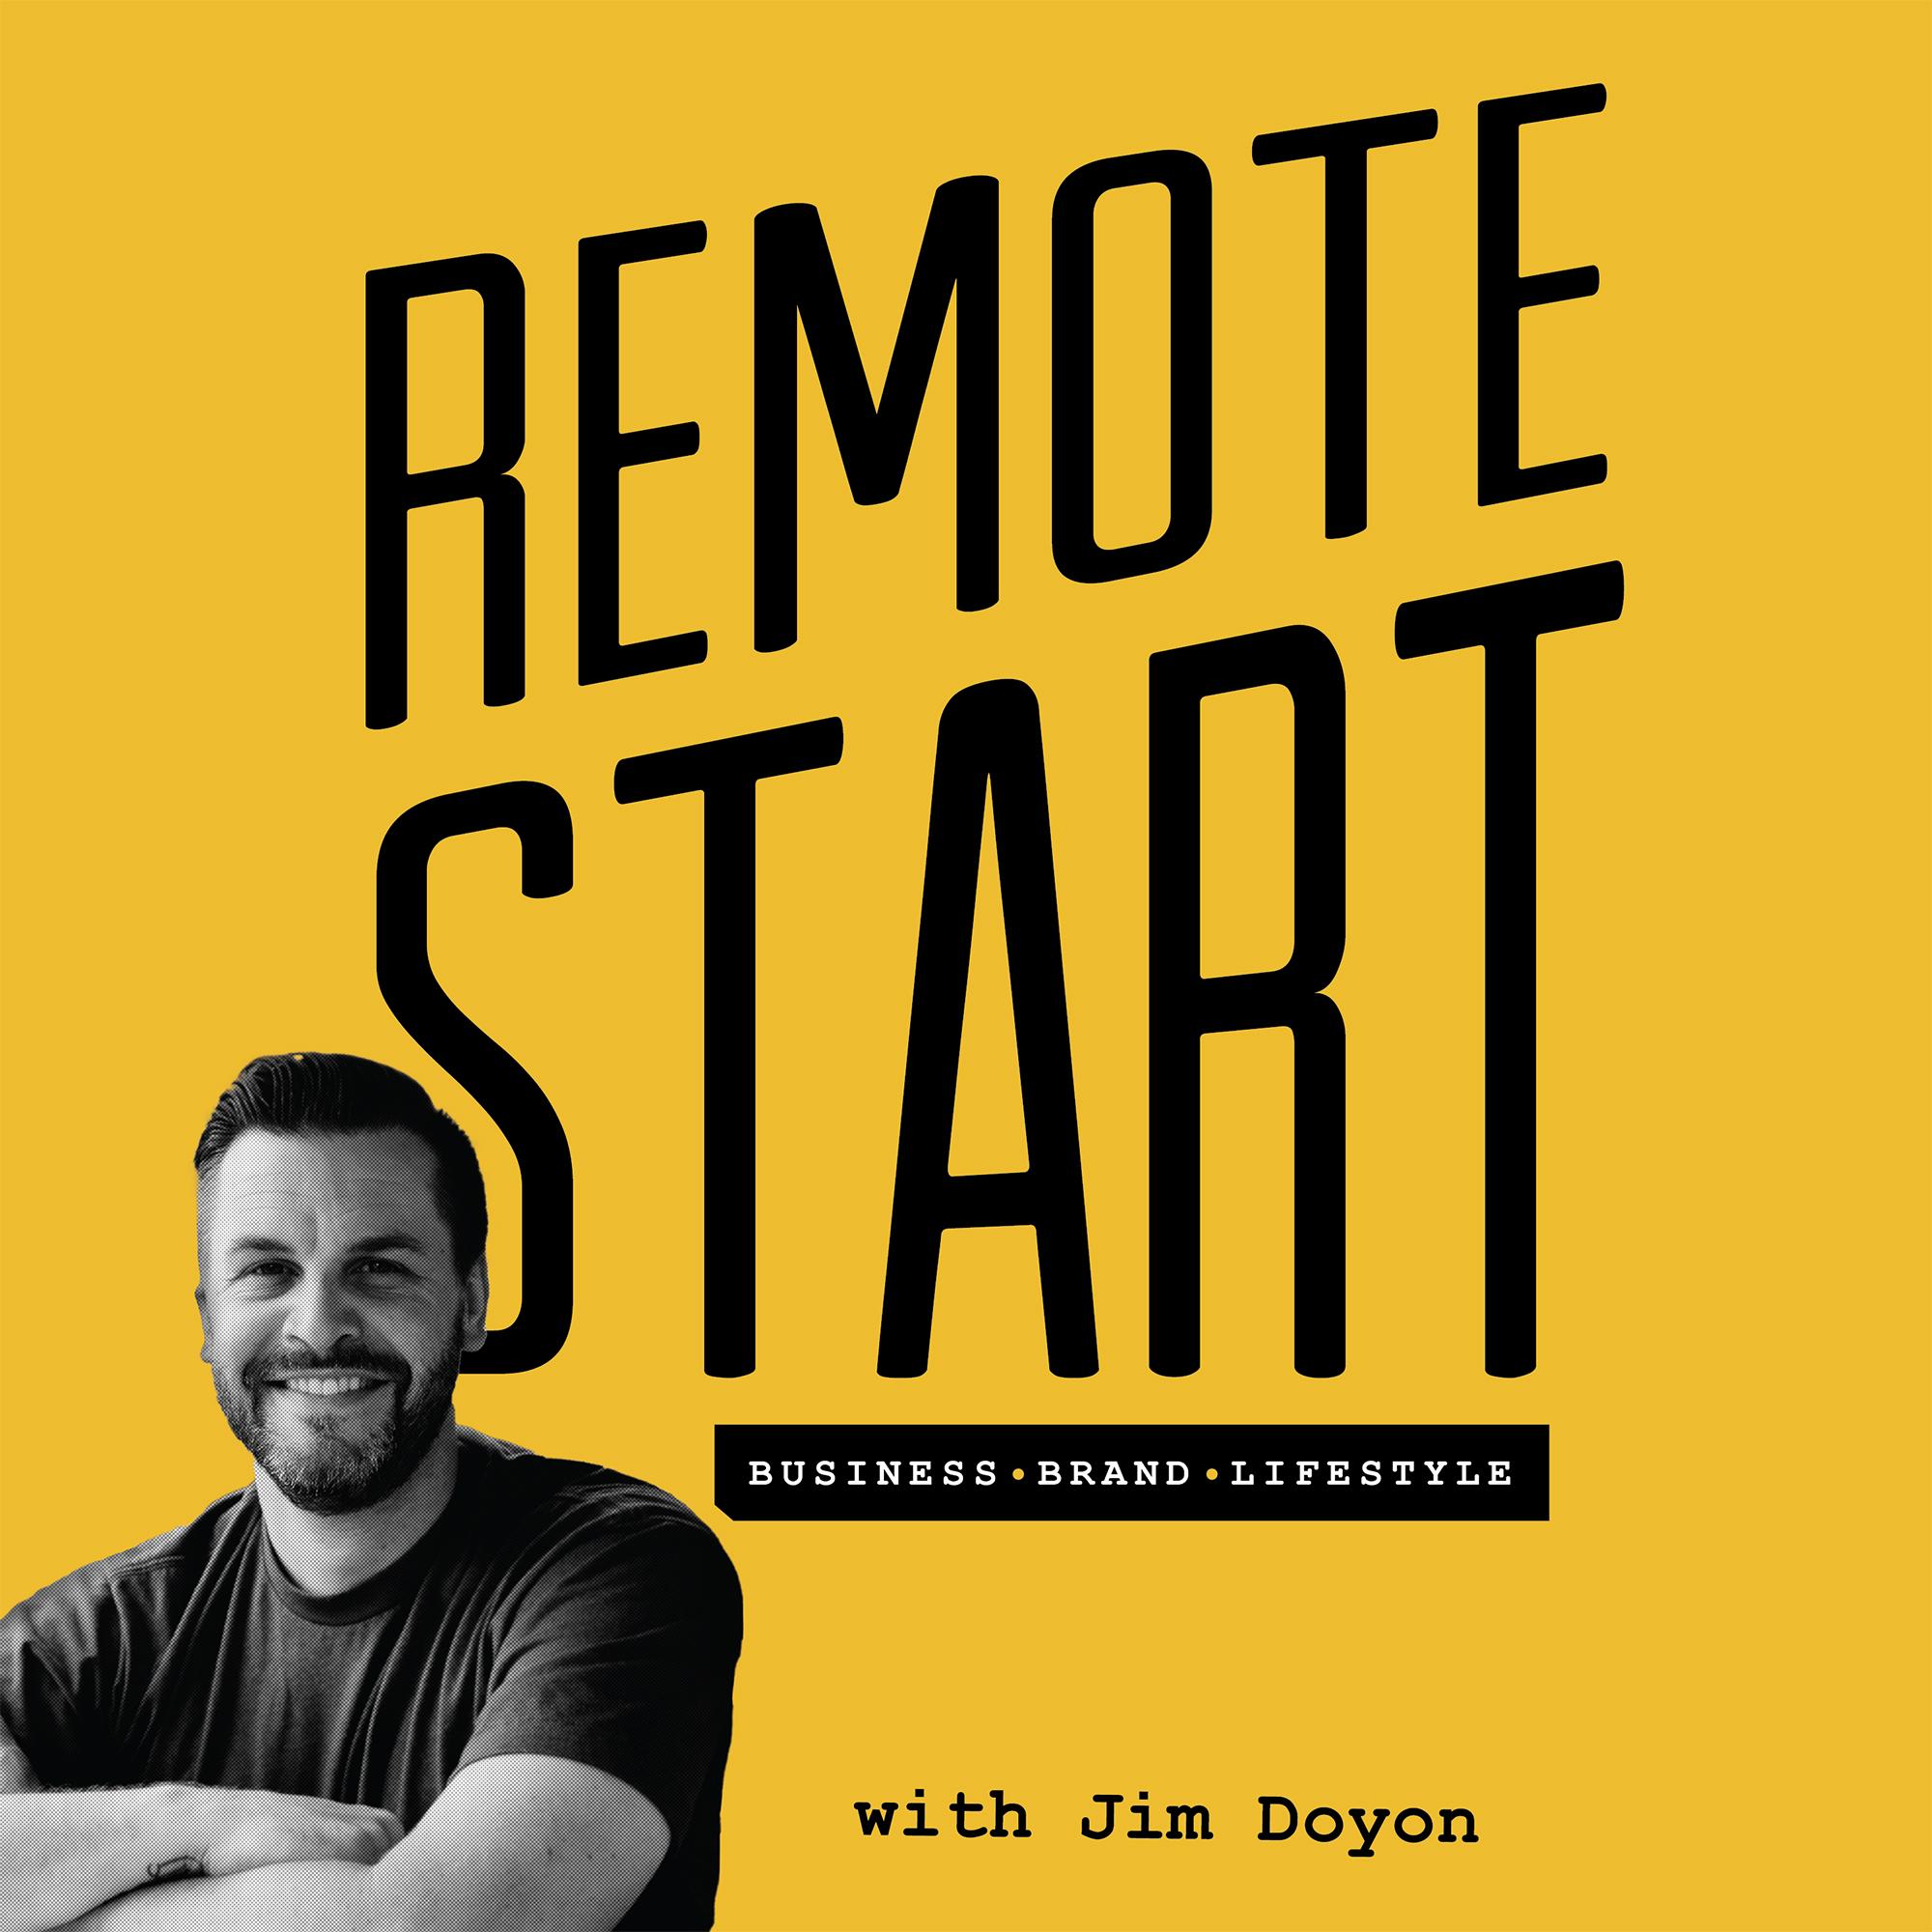 Remote Start Podcast